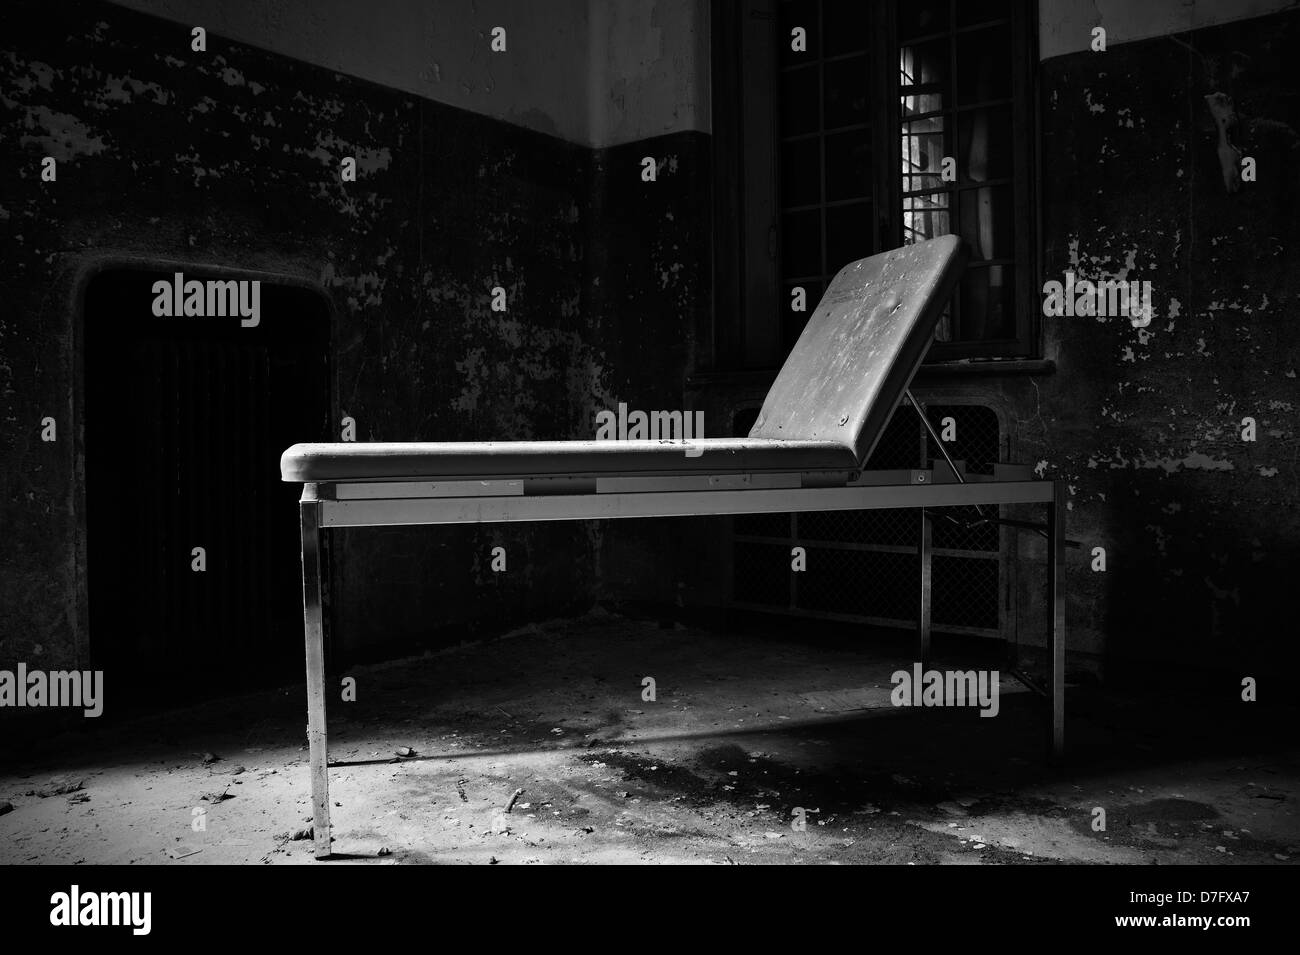 Abandoned hospital ruined medical bed Stock Photo